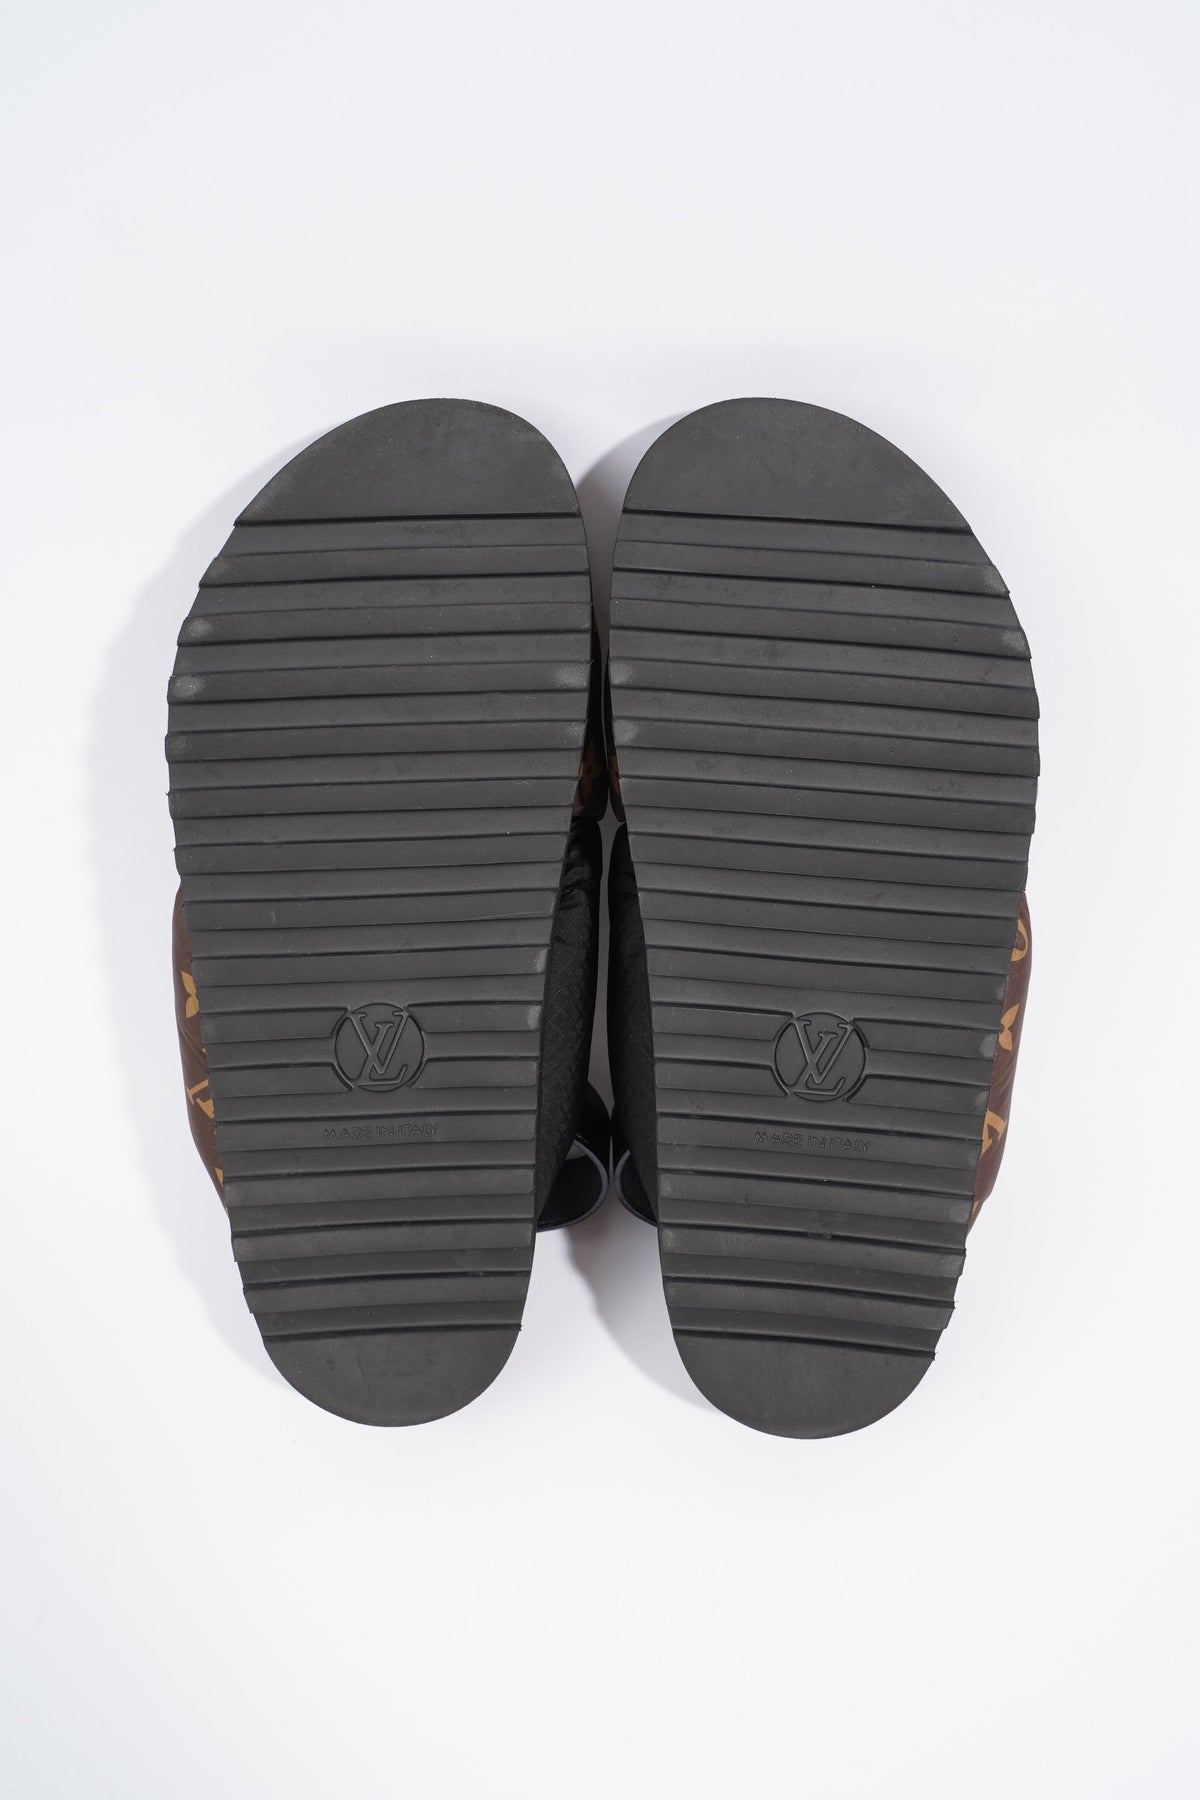 Confort paseo leather sandals Louis Vuitton Black size 38.5 EU in